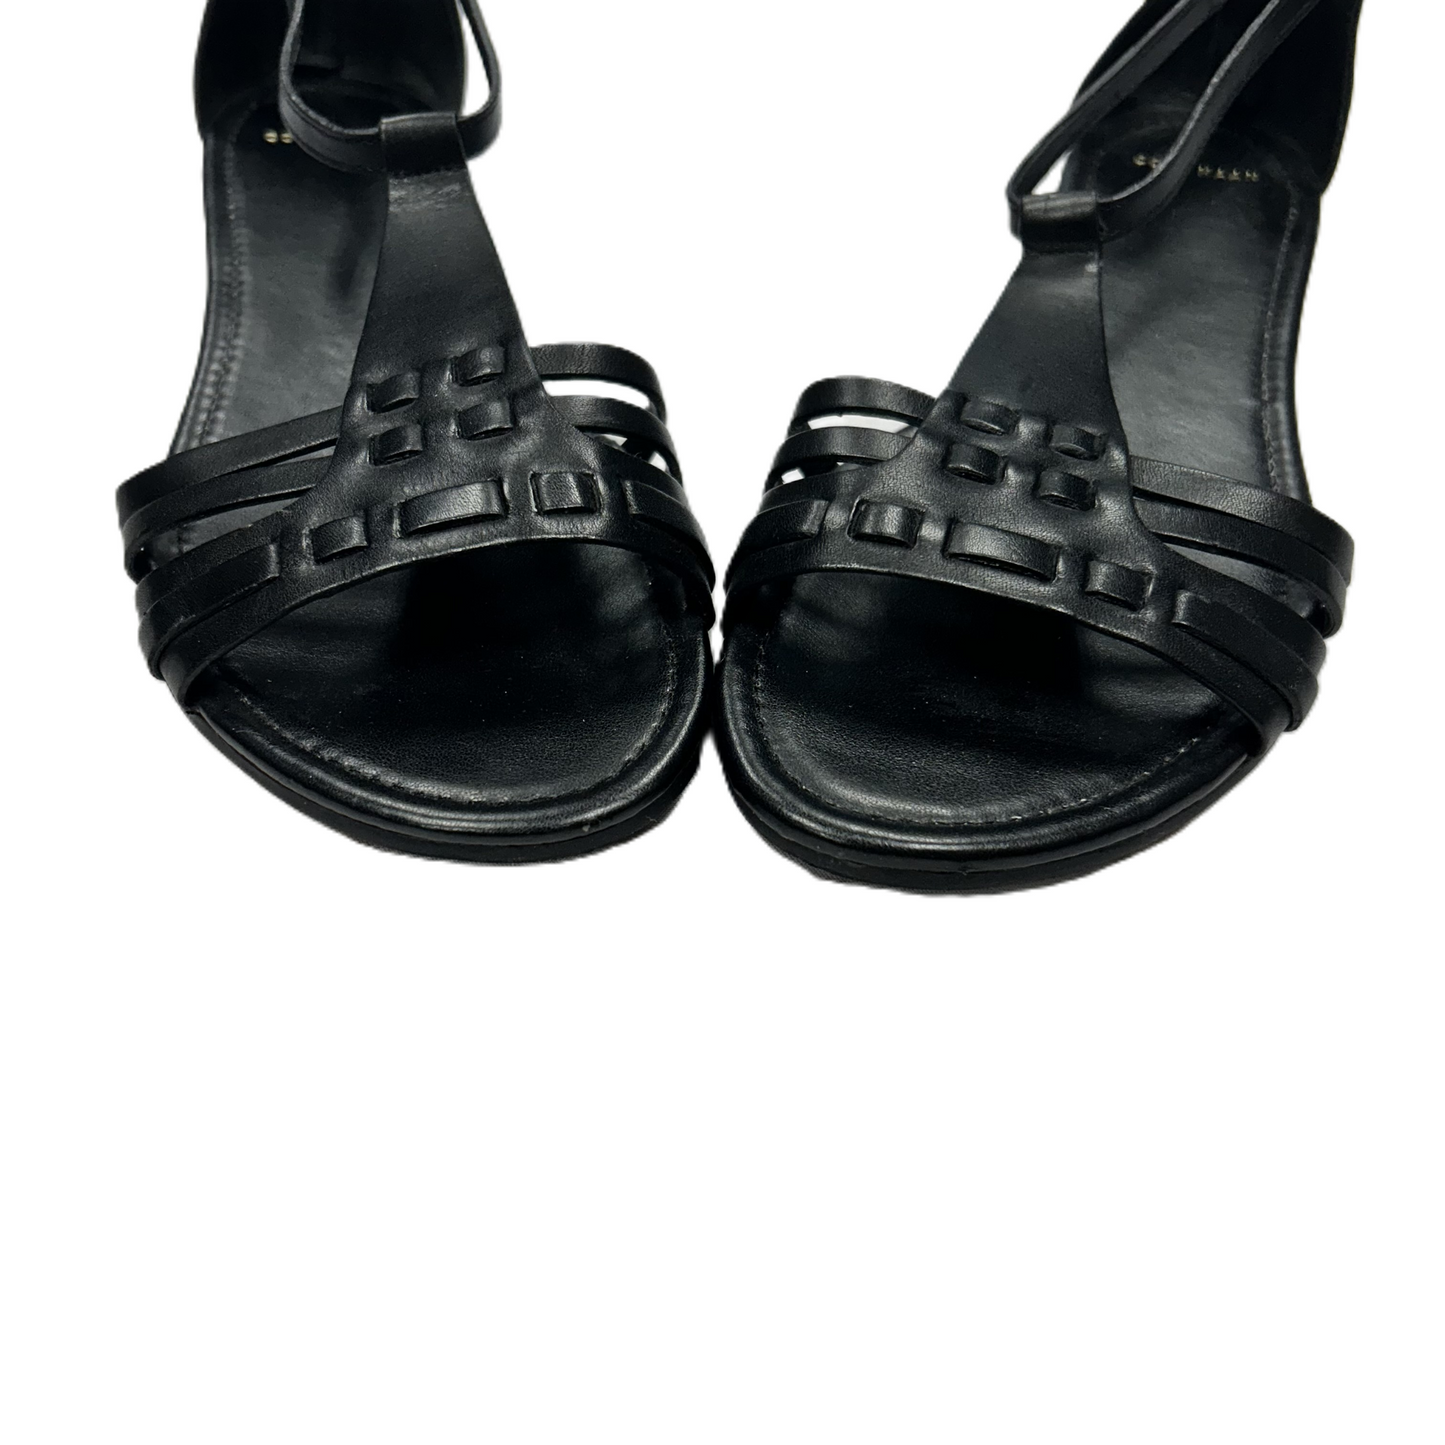 Black Sandals Designer By Cole-haan, Size: 9.5